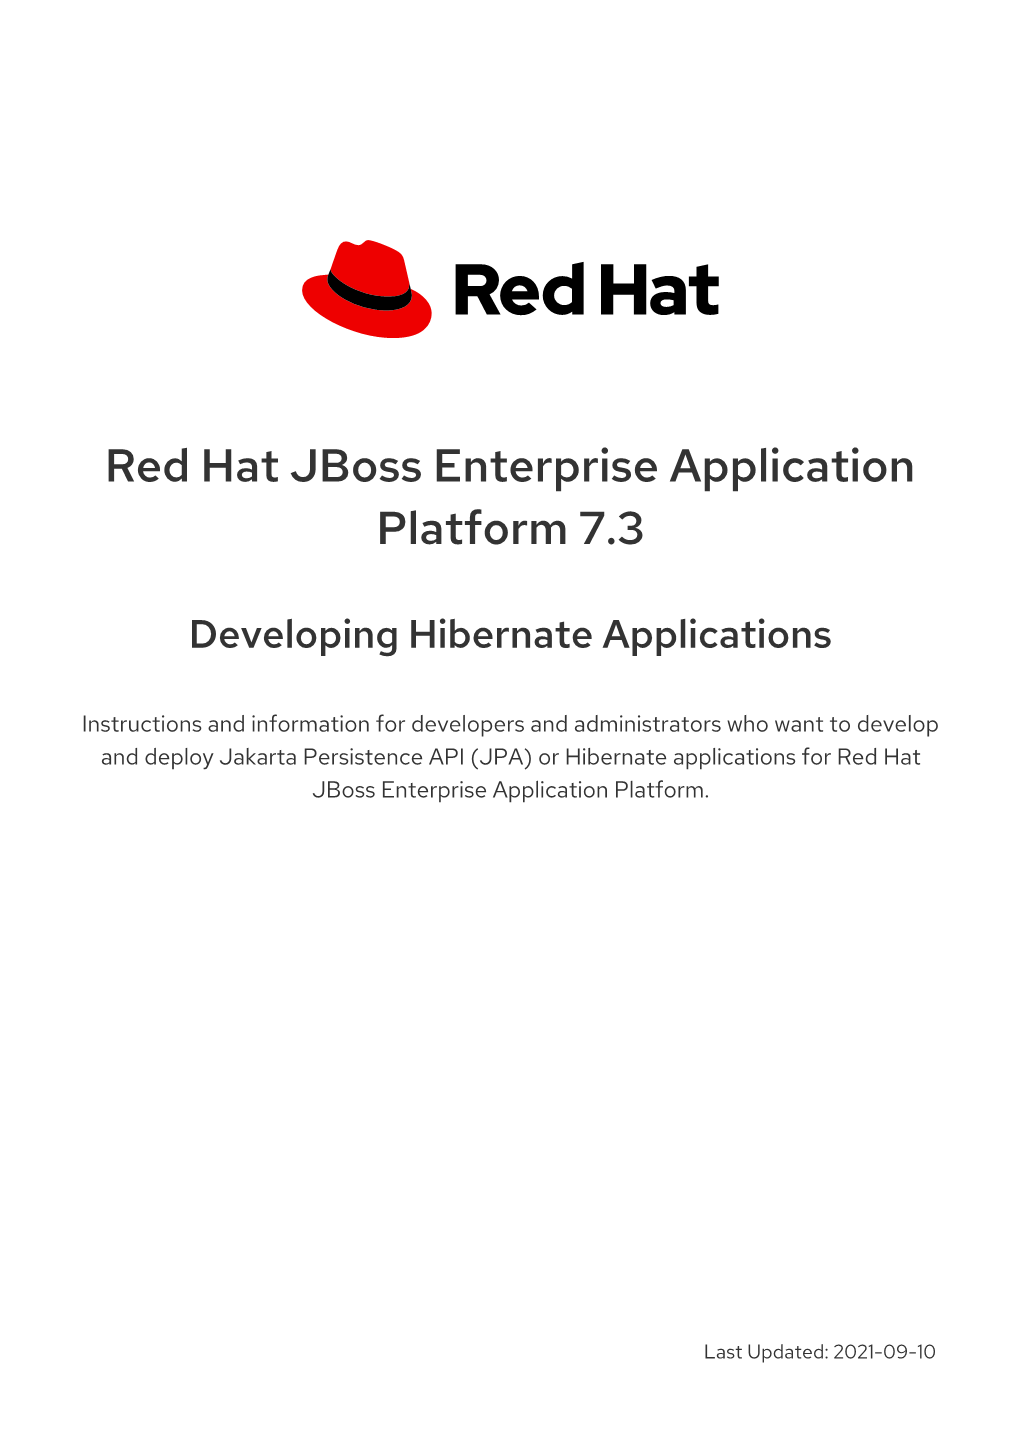 Red Hat Jboss Enterprise Application Platform 7.3 Developing Hibernate Applications